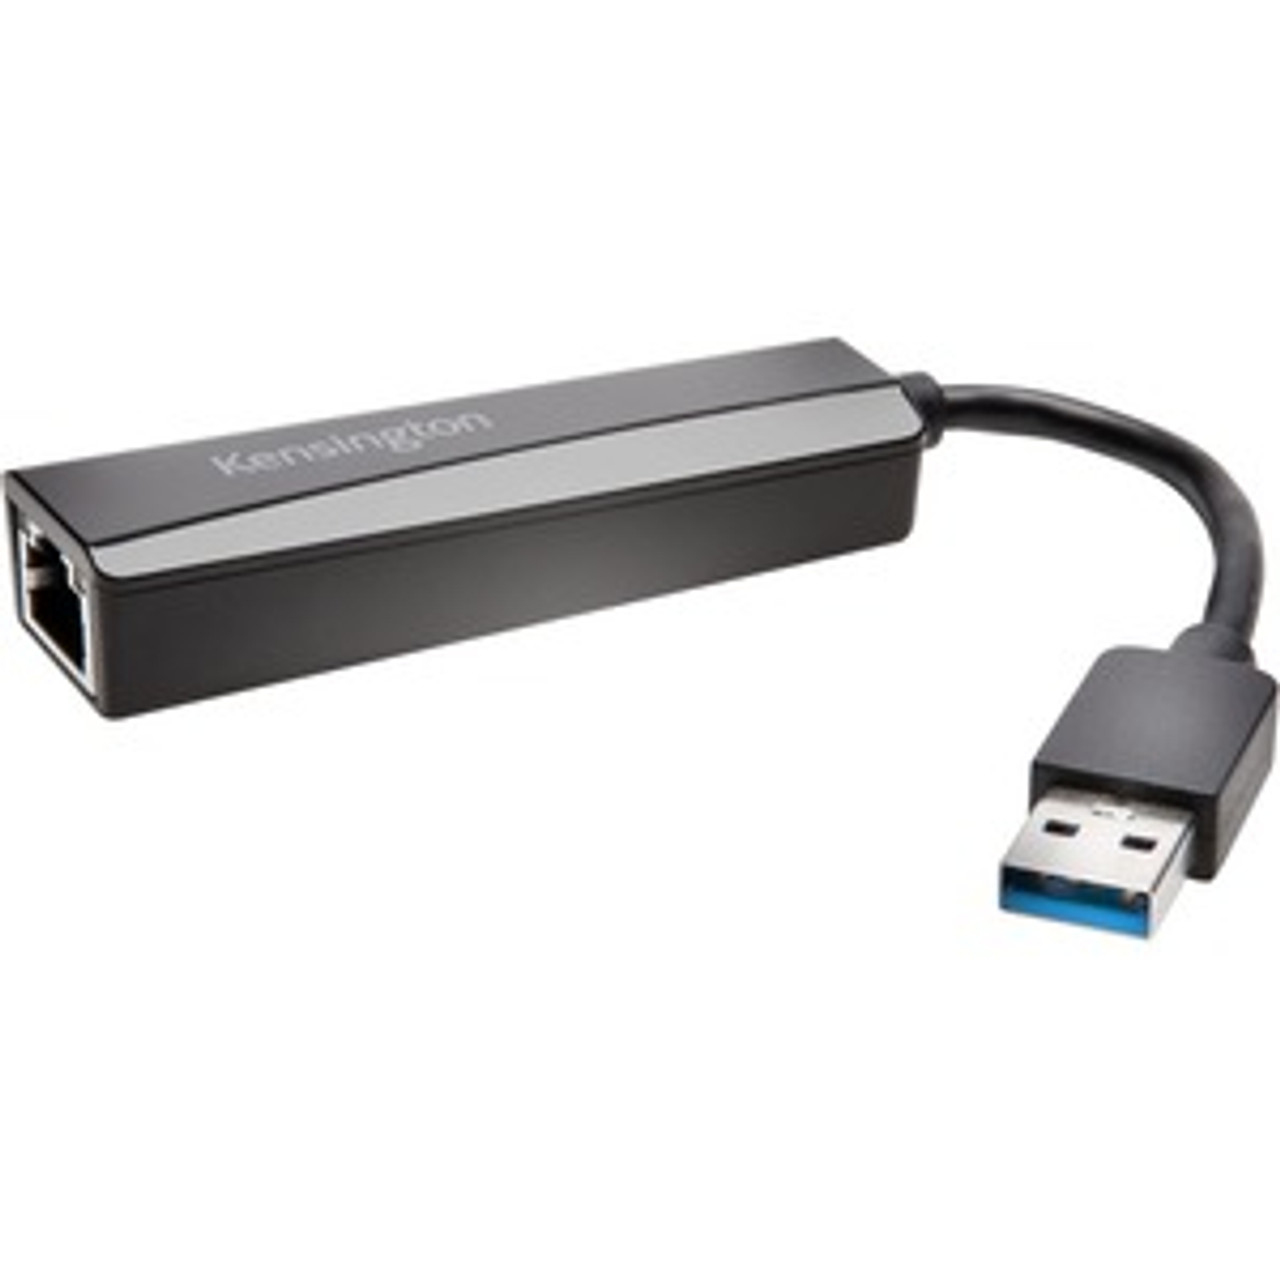 K33981WW Kensington UA0000E USB 3.0 to Gigabit Etherent Adapter (Black)